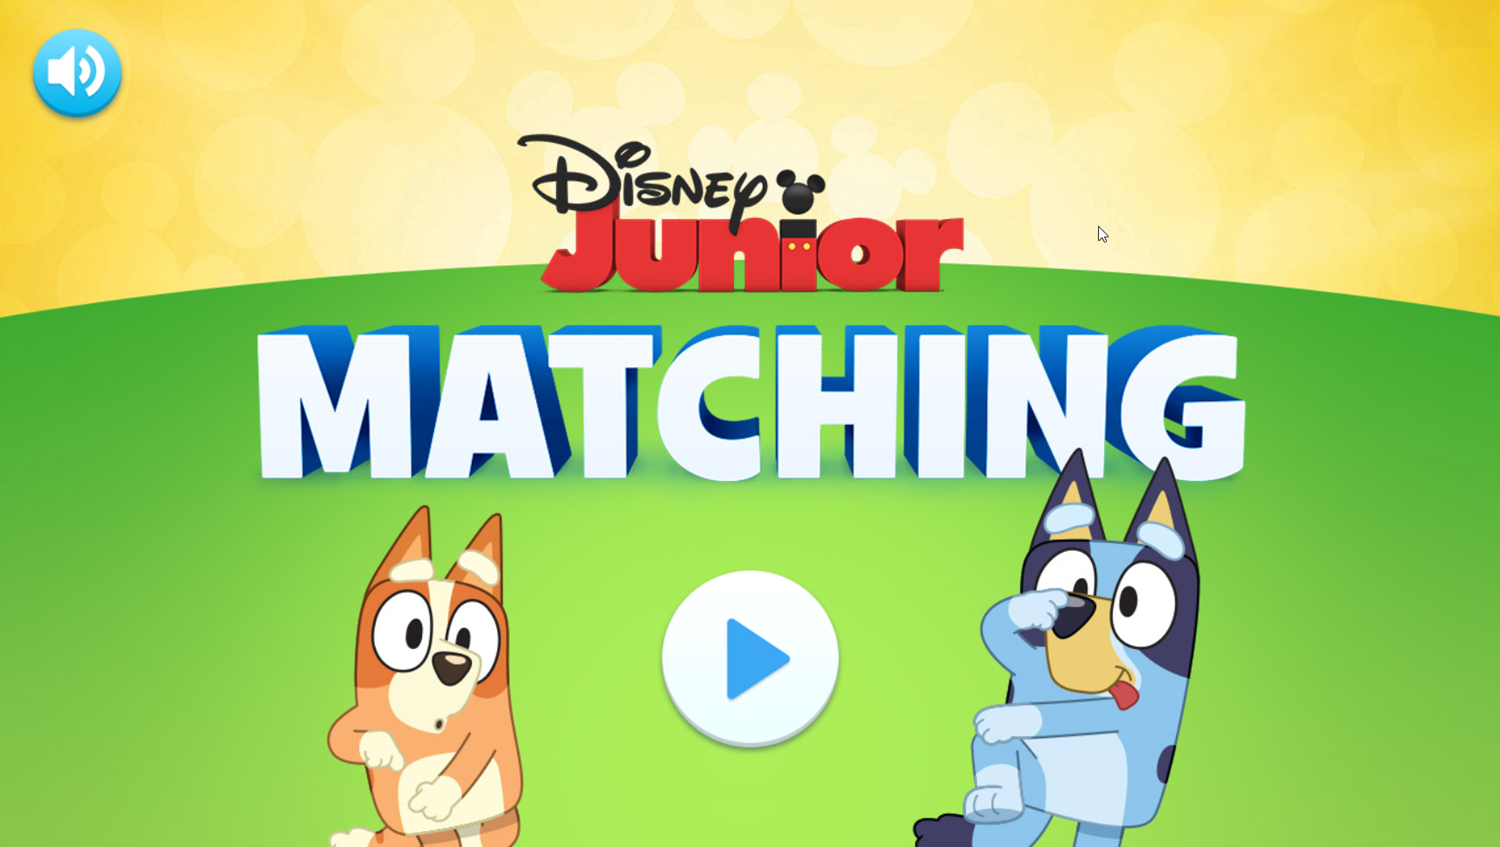 Disney Jr Matching Game Welcome Screen Screenshot.